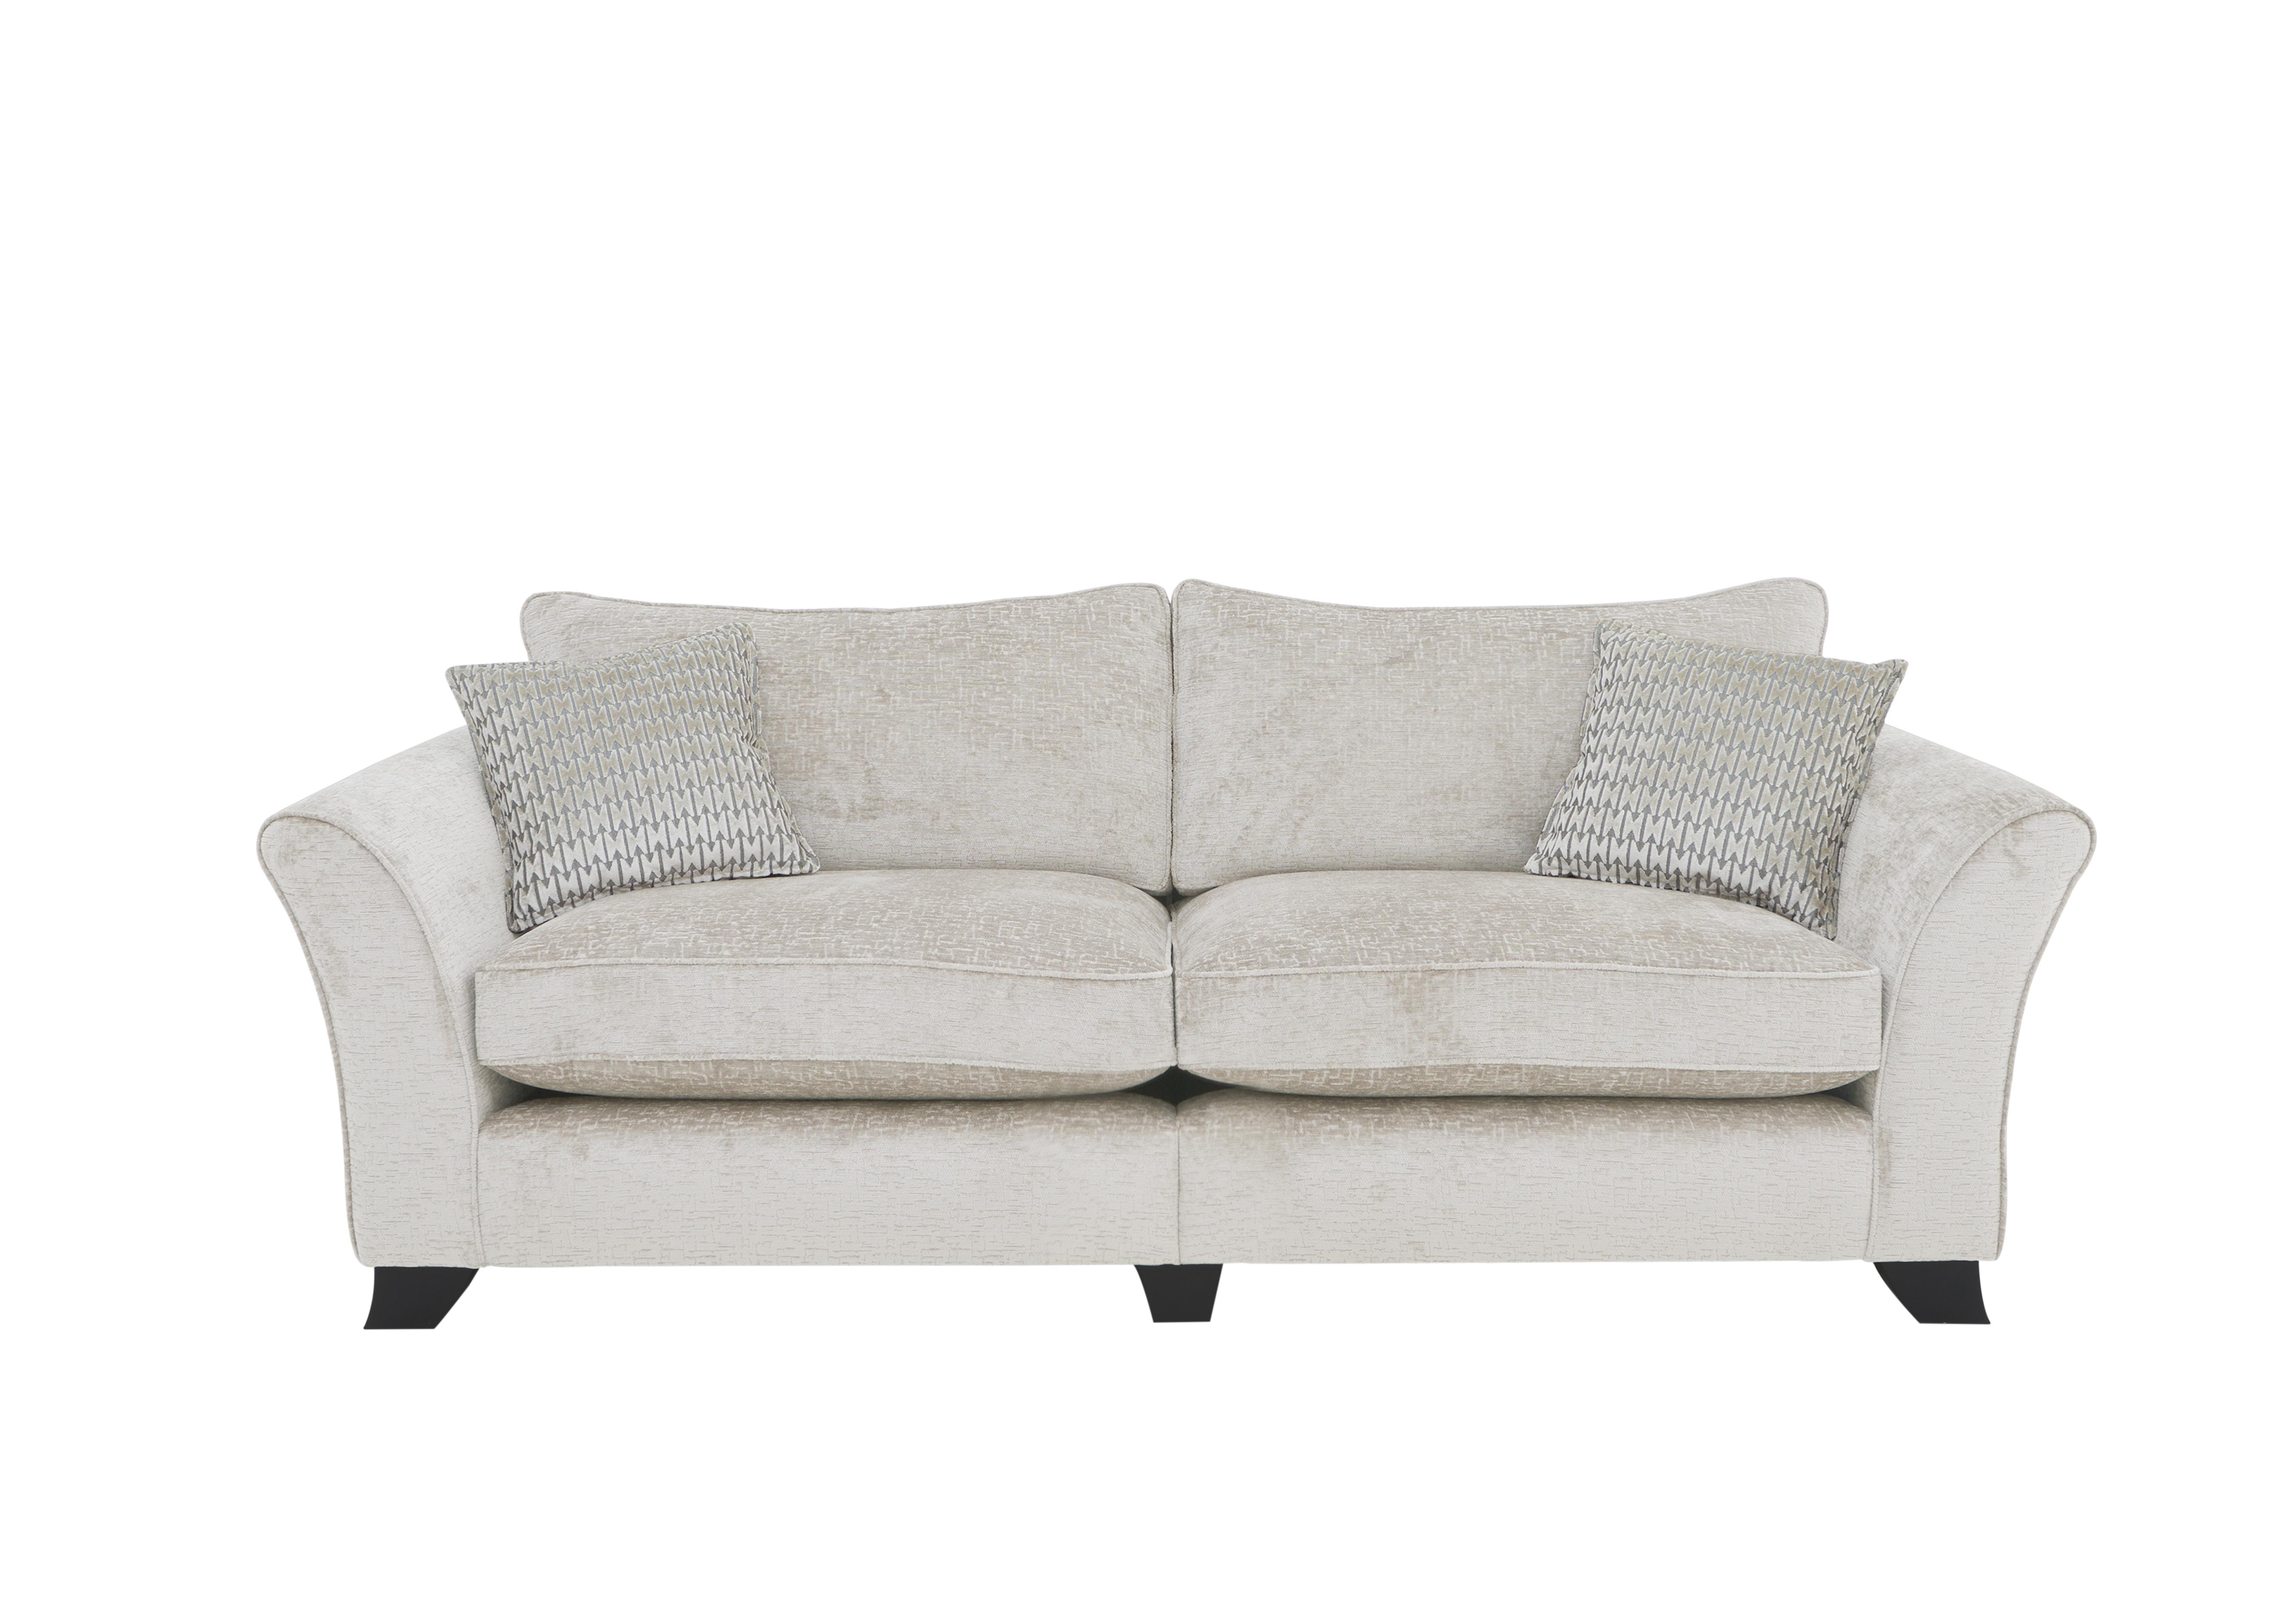 Sasha 4 Seater Split Classic Back Sofa in Alexandra Natural on Furniture Village